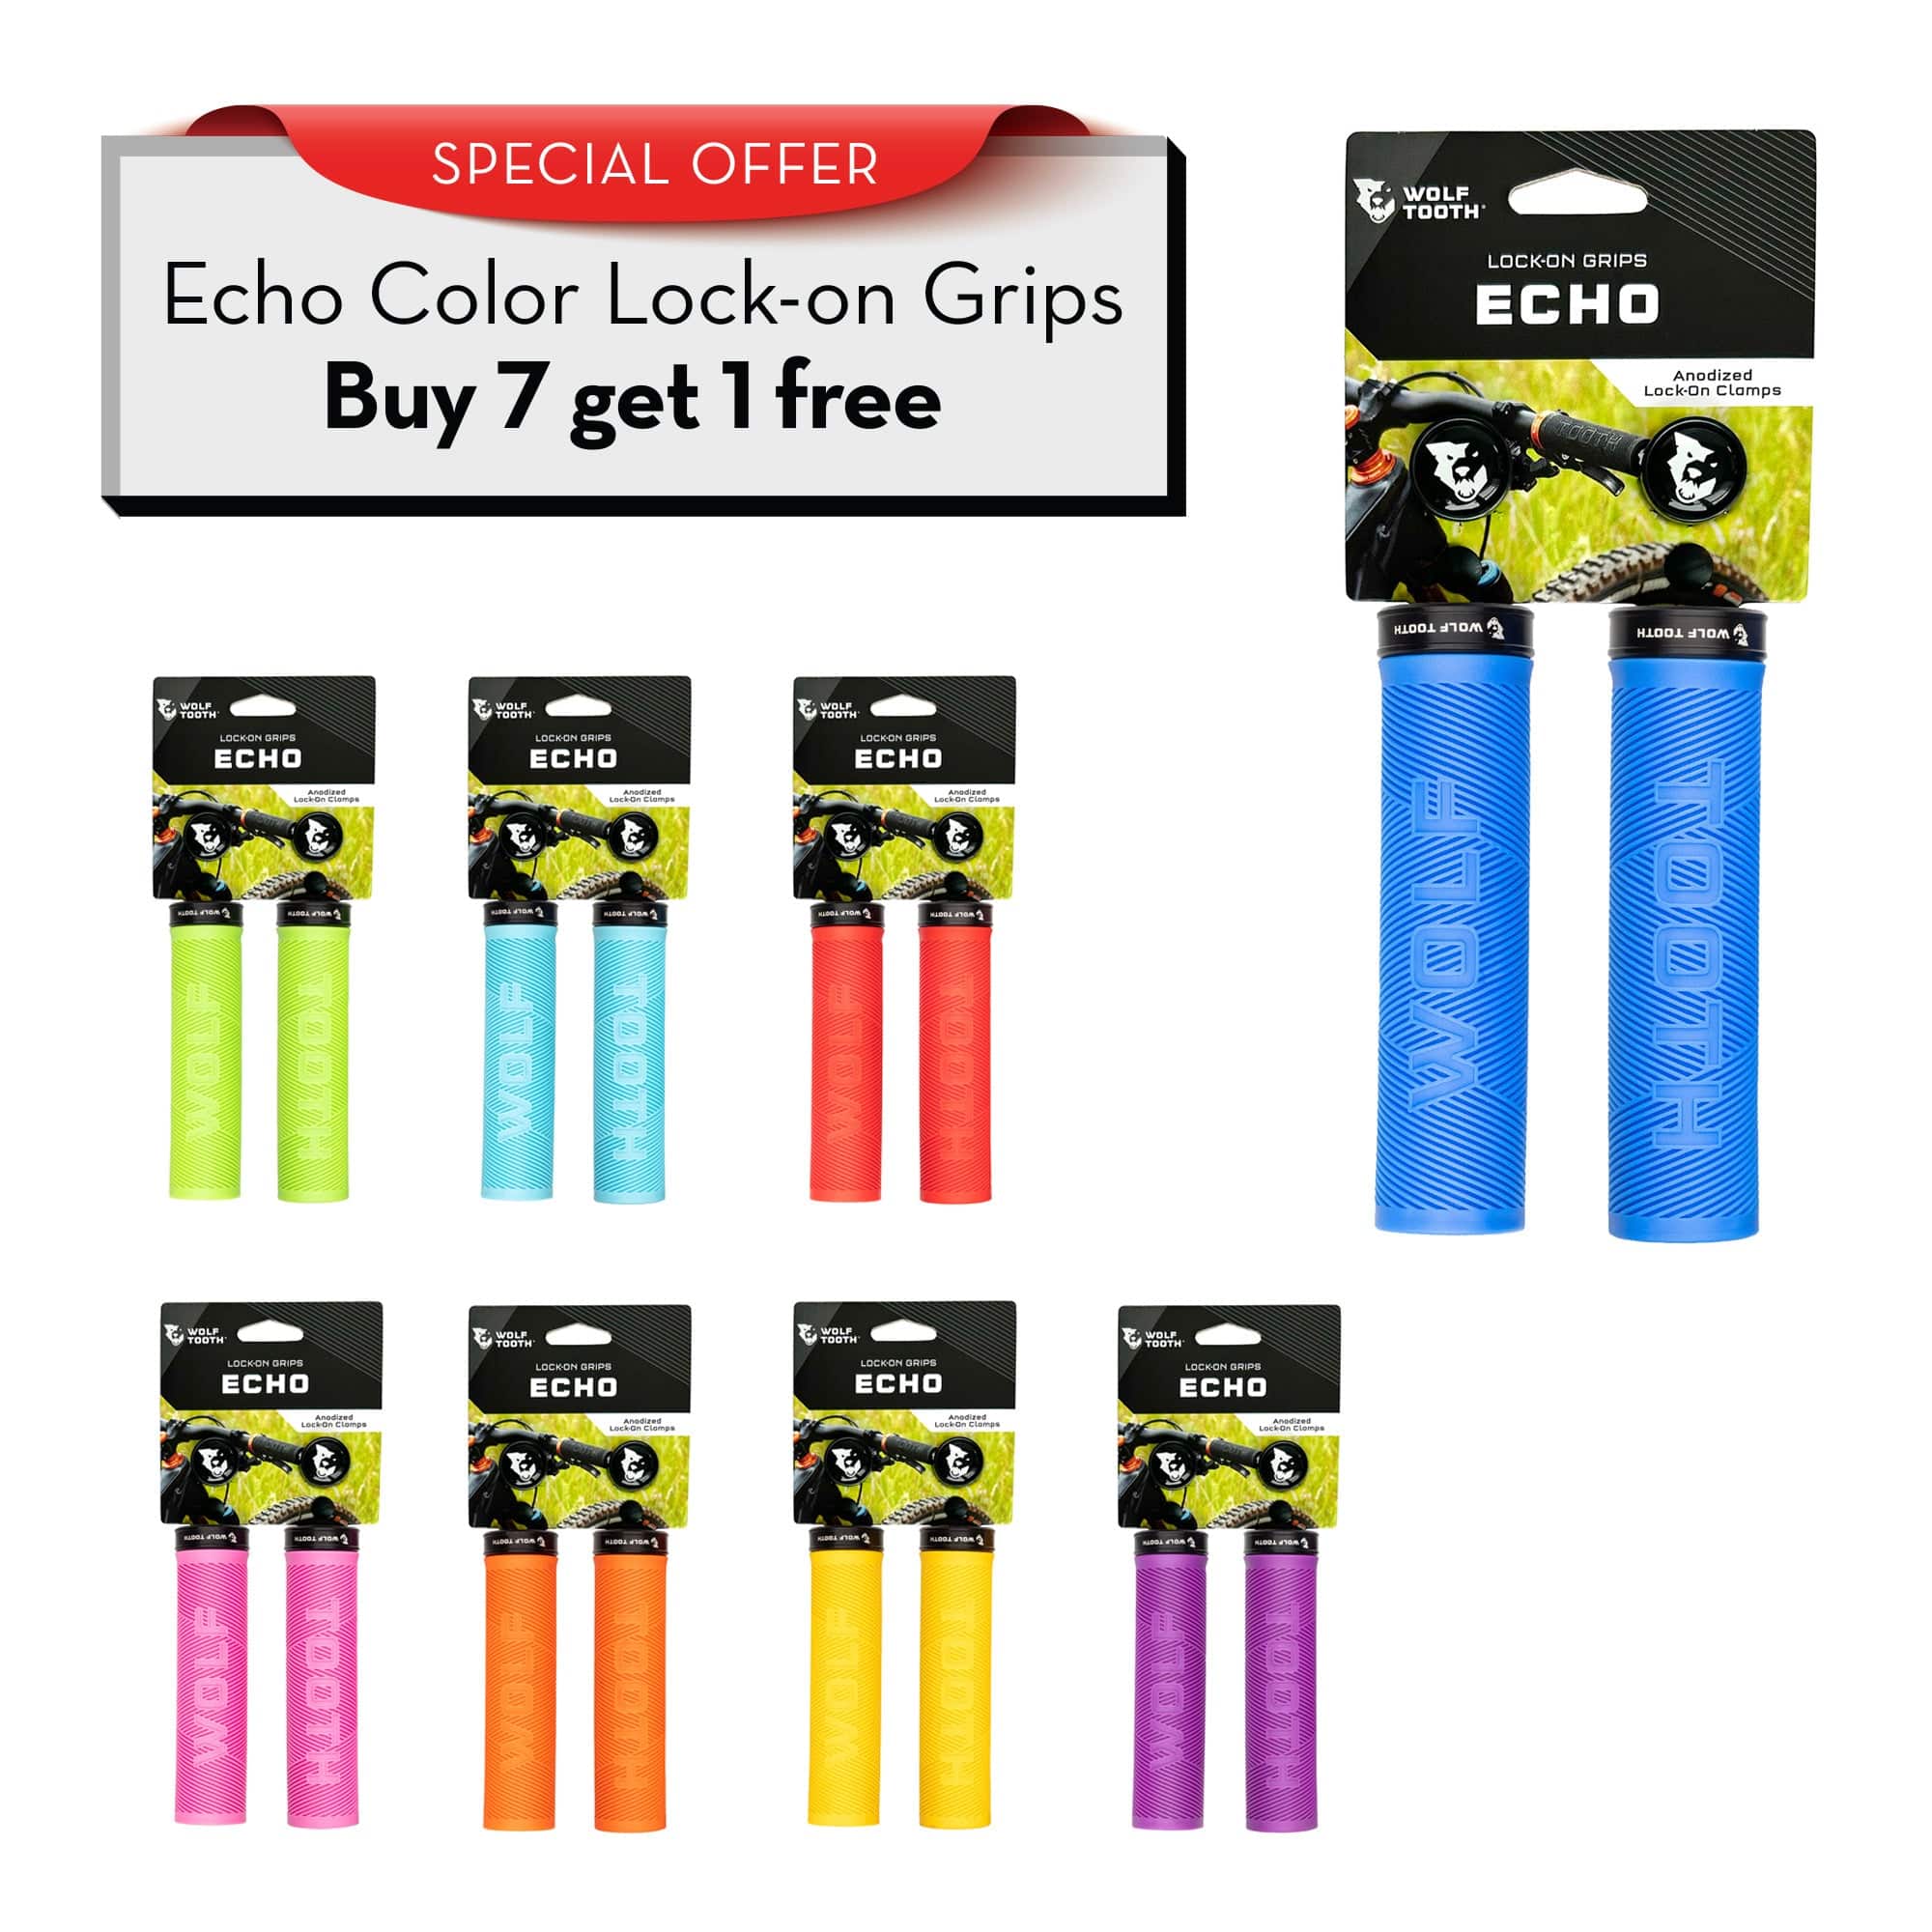 Echo Lock-On Color Grip Bundle - Buy 7 sets and get 1 set for Free